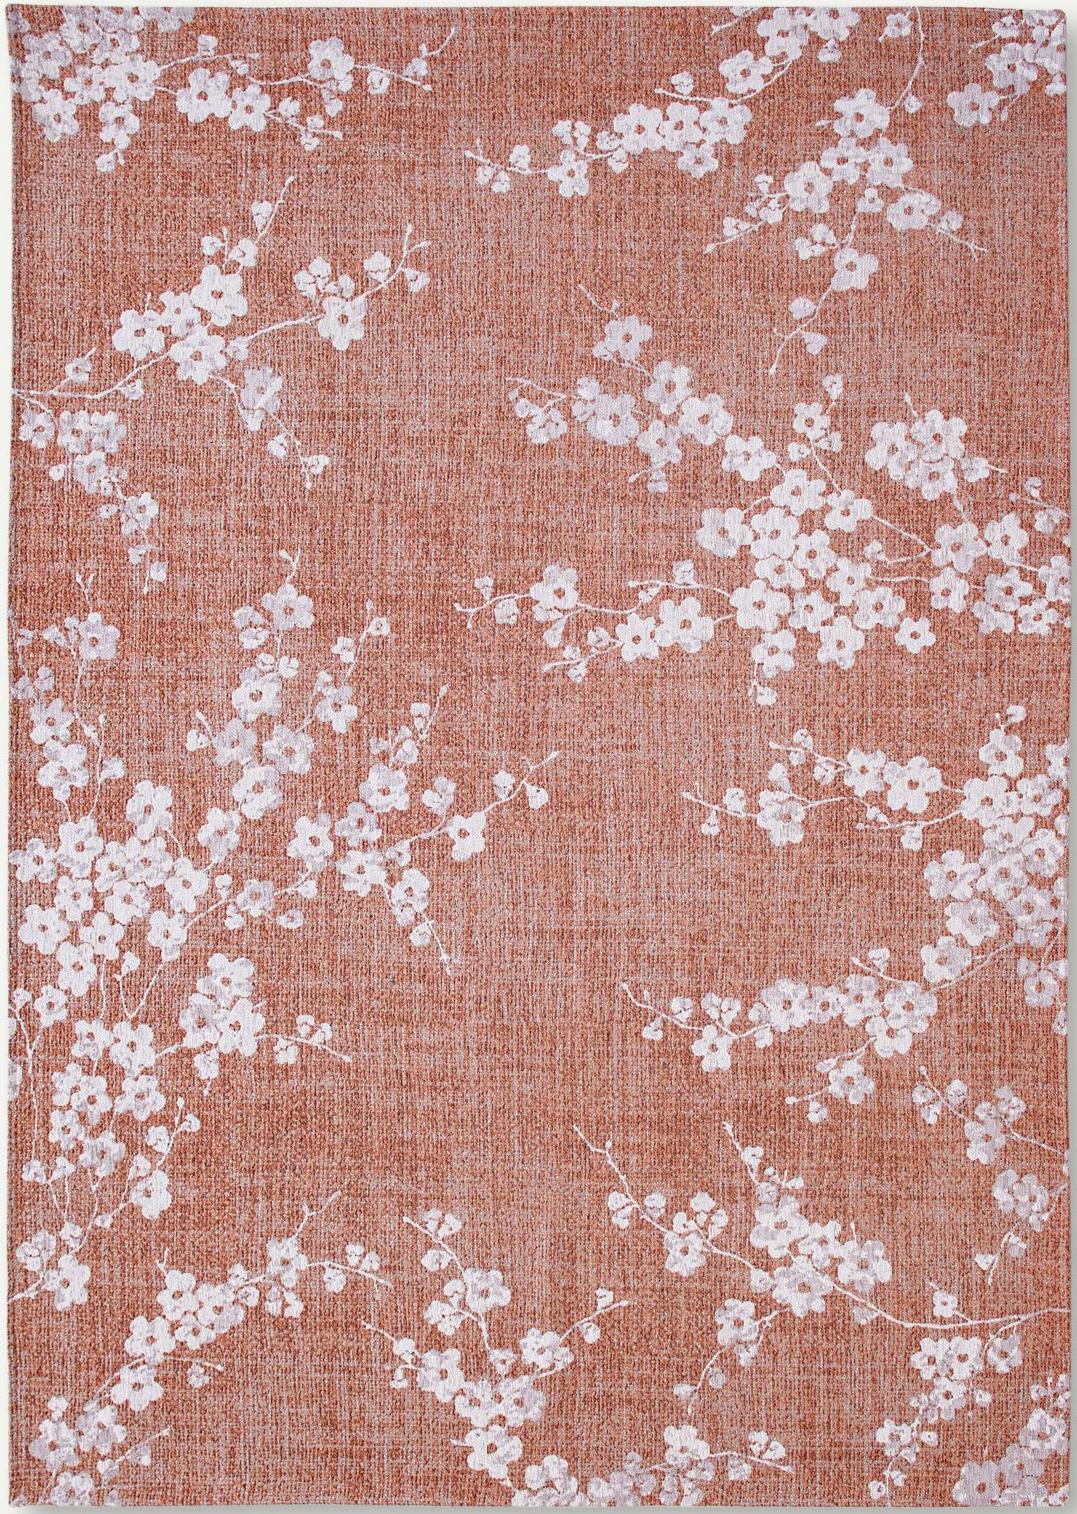 Copper Pink Modern Rug ☞ Size: 5' 7" x 8' (170 x 240 cm)